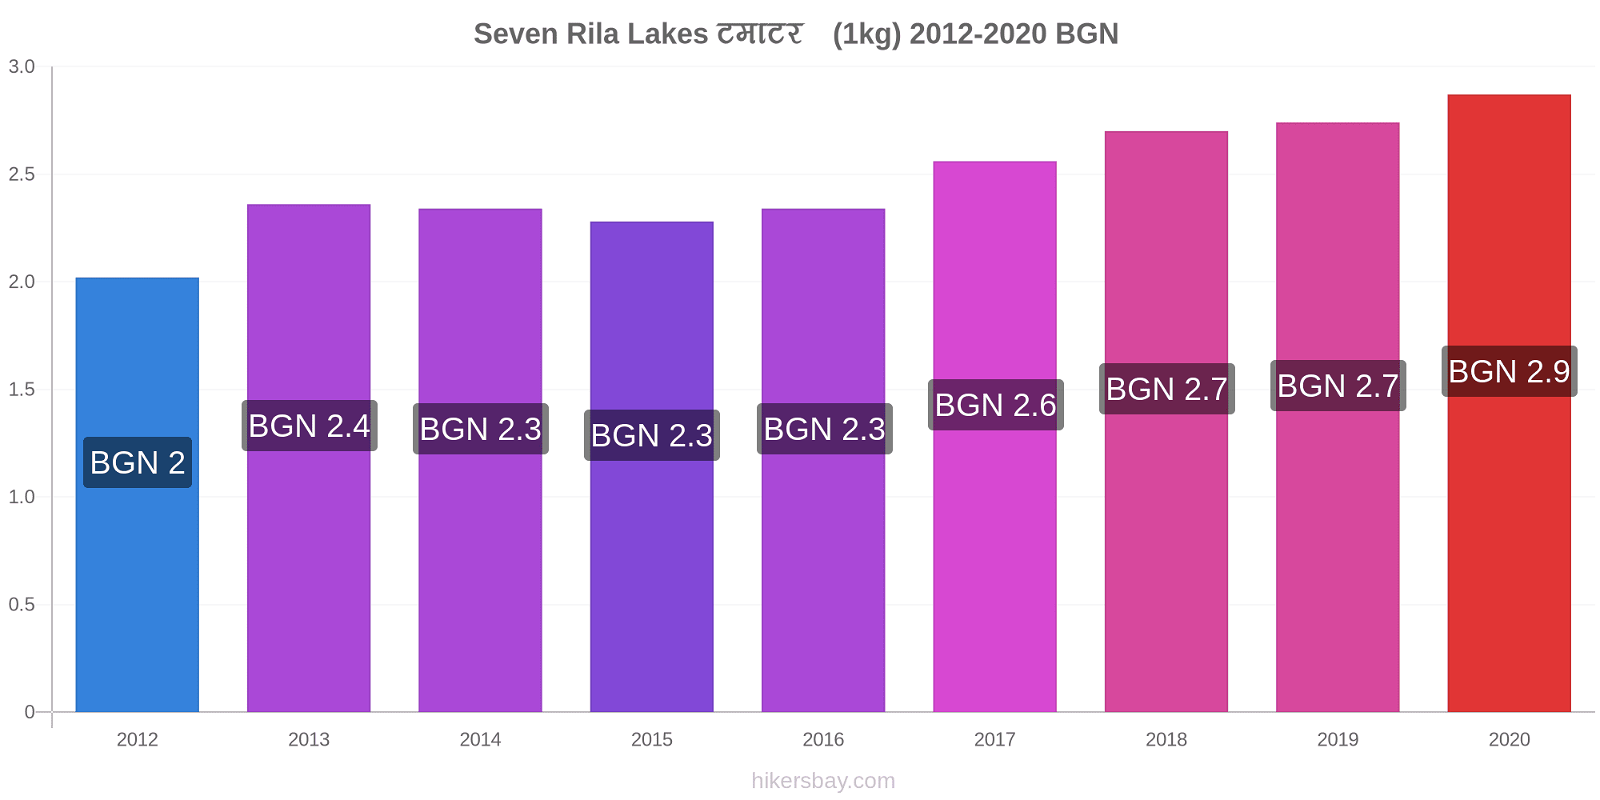 Seven Rila Lakes मूल्य परिवर्तन टमाटर (1kg) hikersbay.com